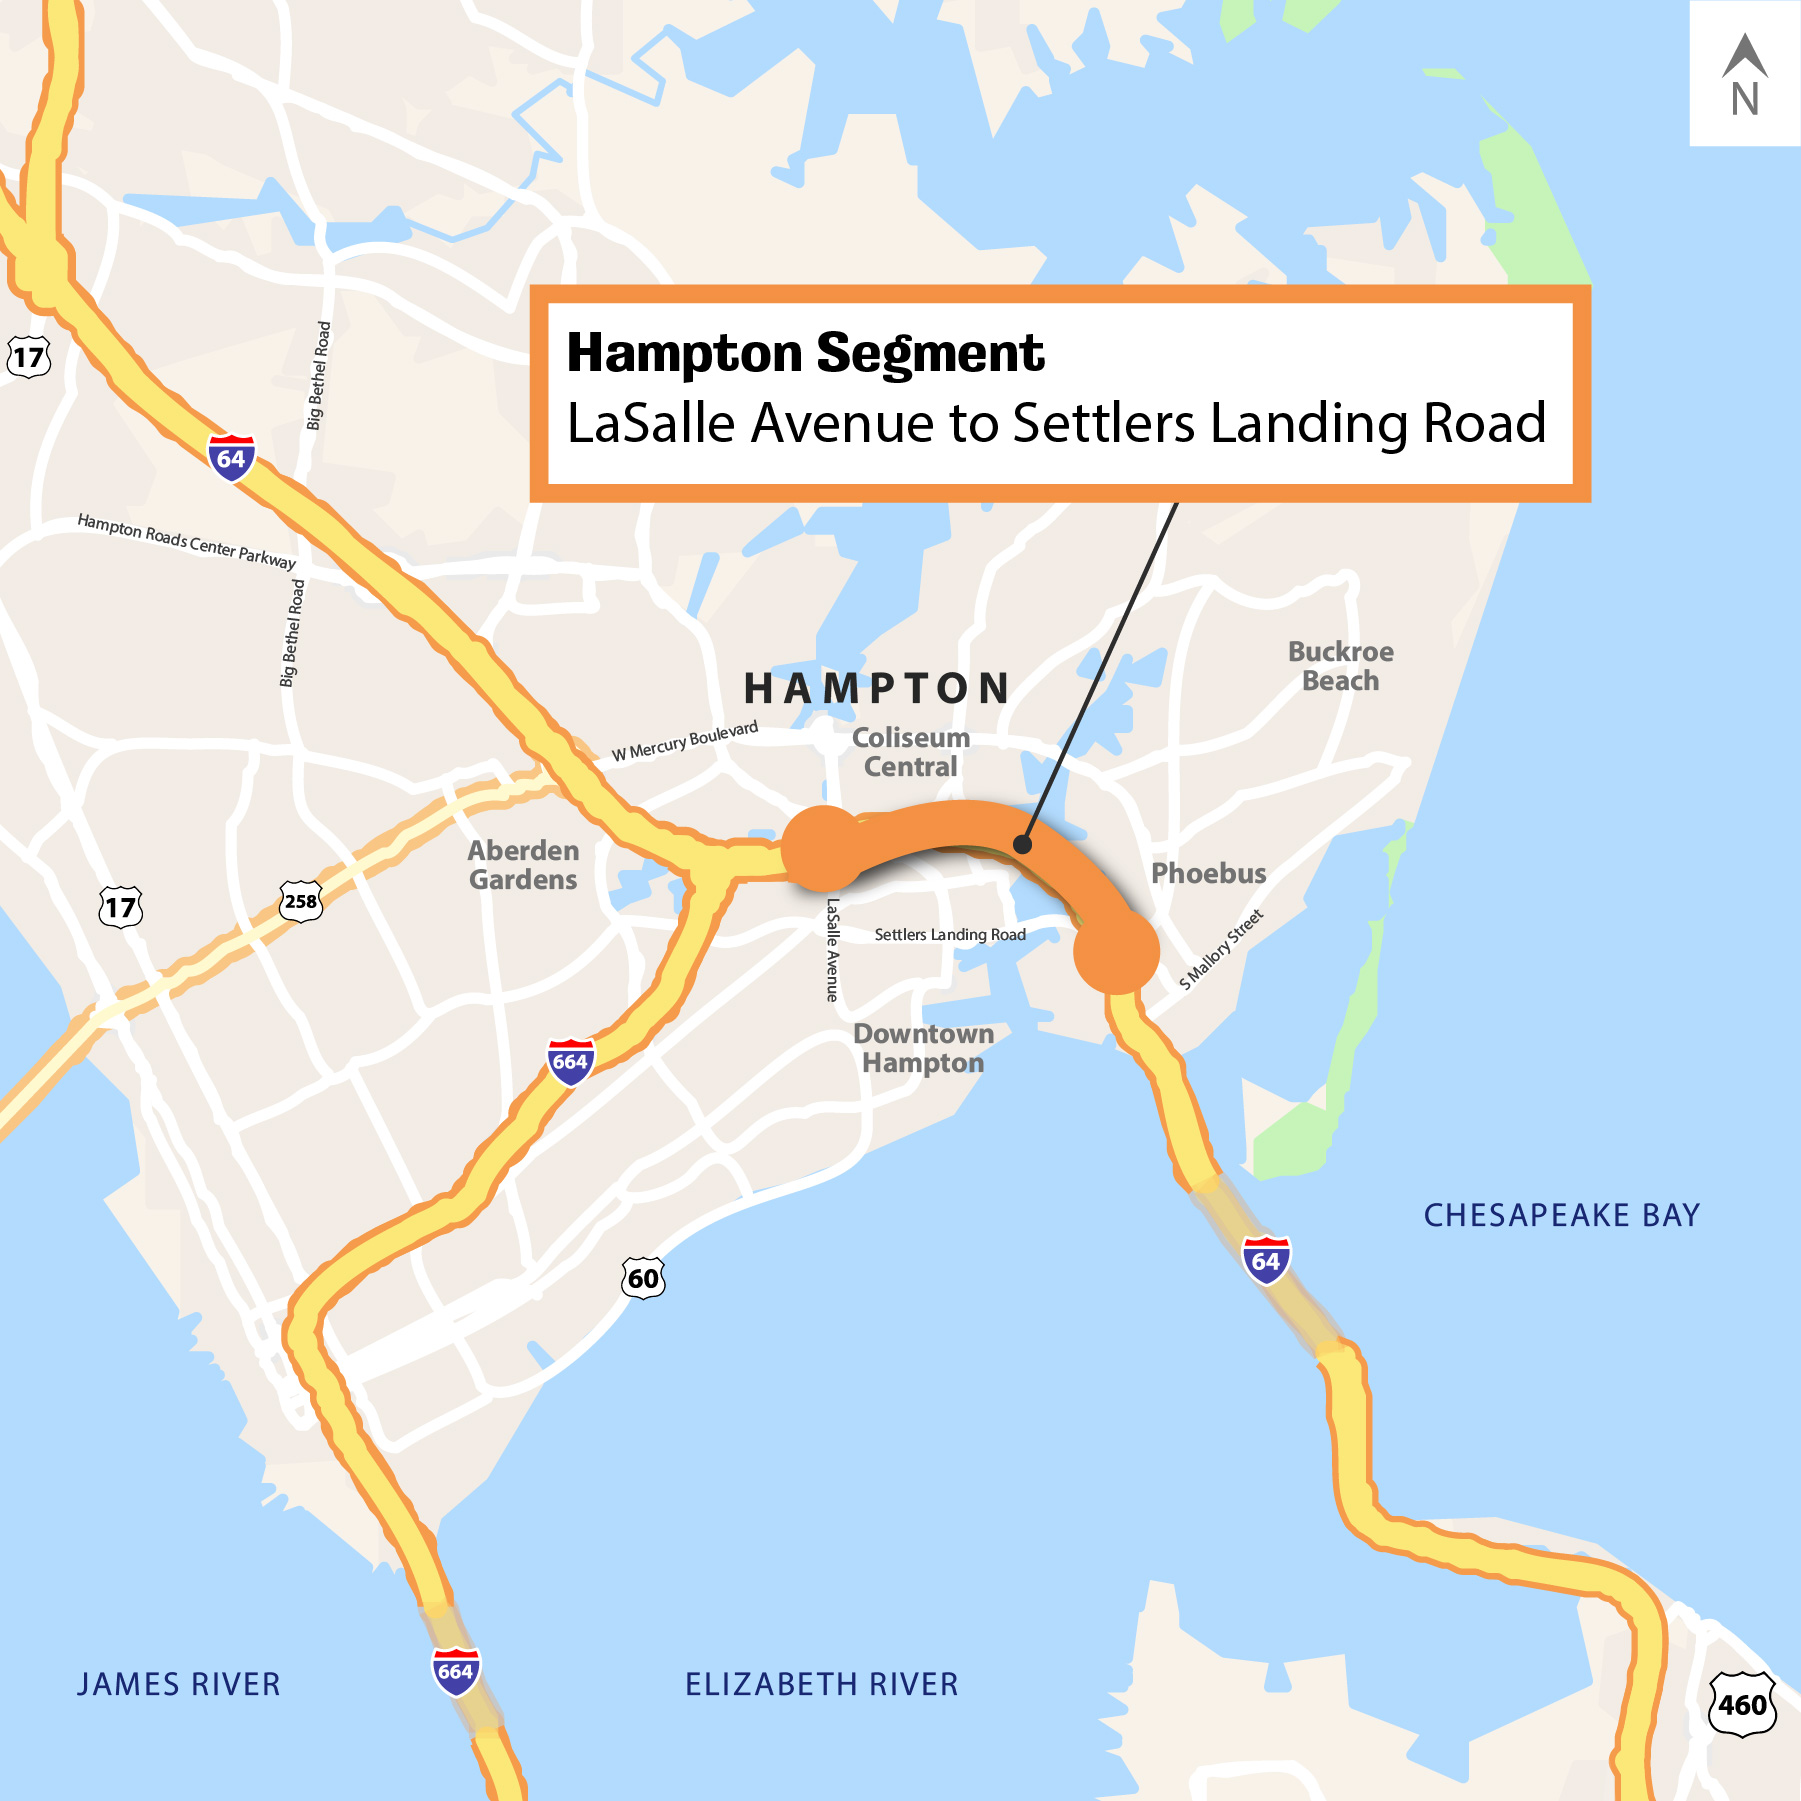 Map showing Segment 4C: Hampton Segment - LaSalle Avenue to Settlers Landing Road